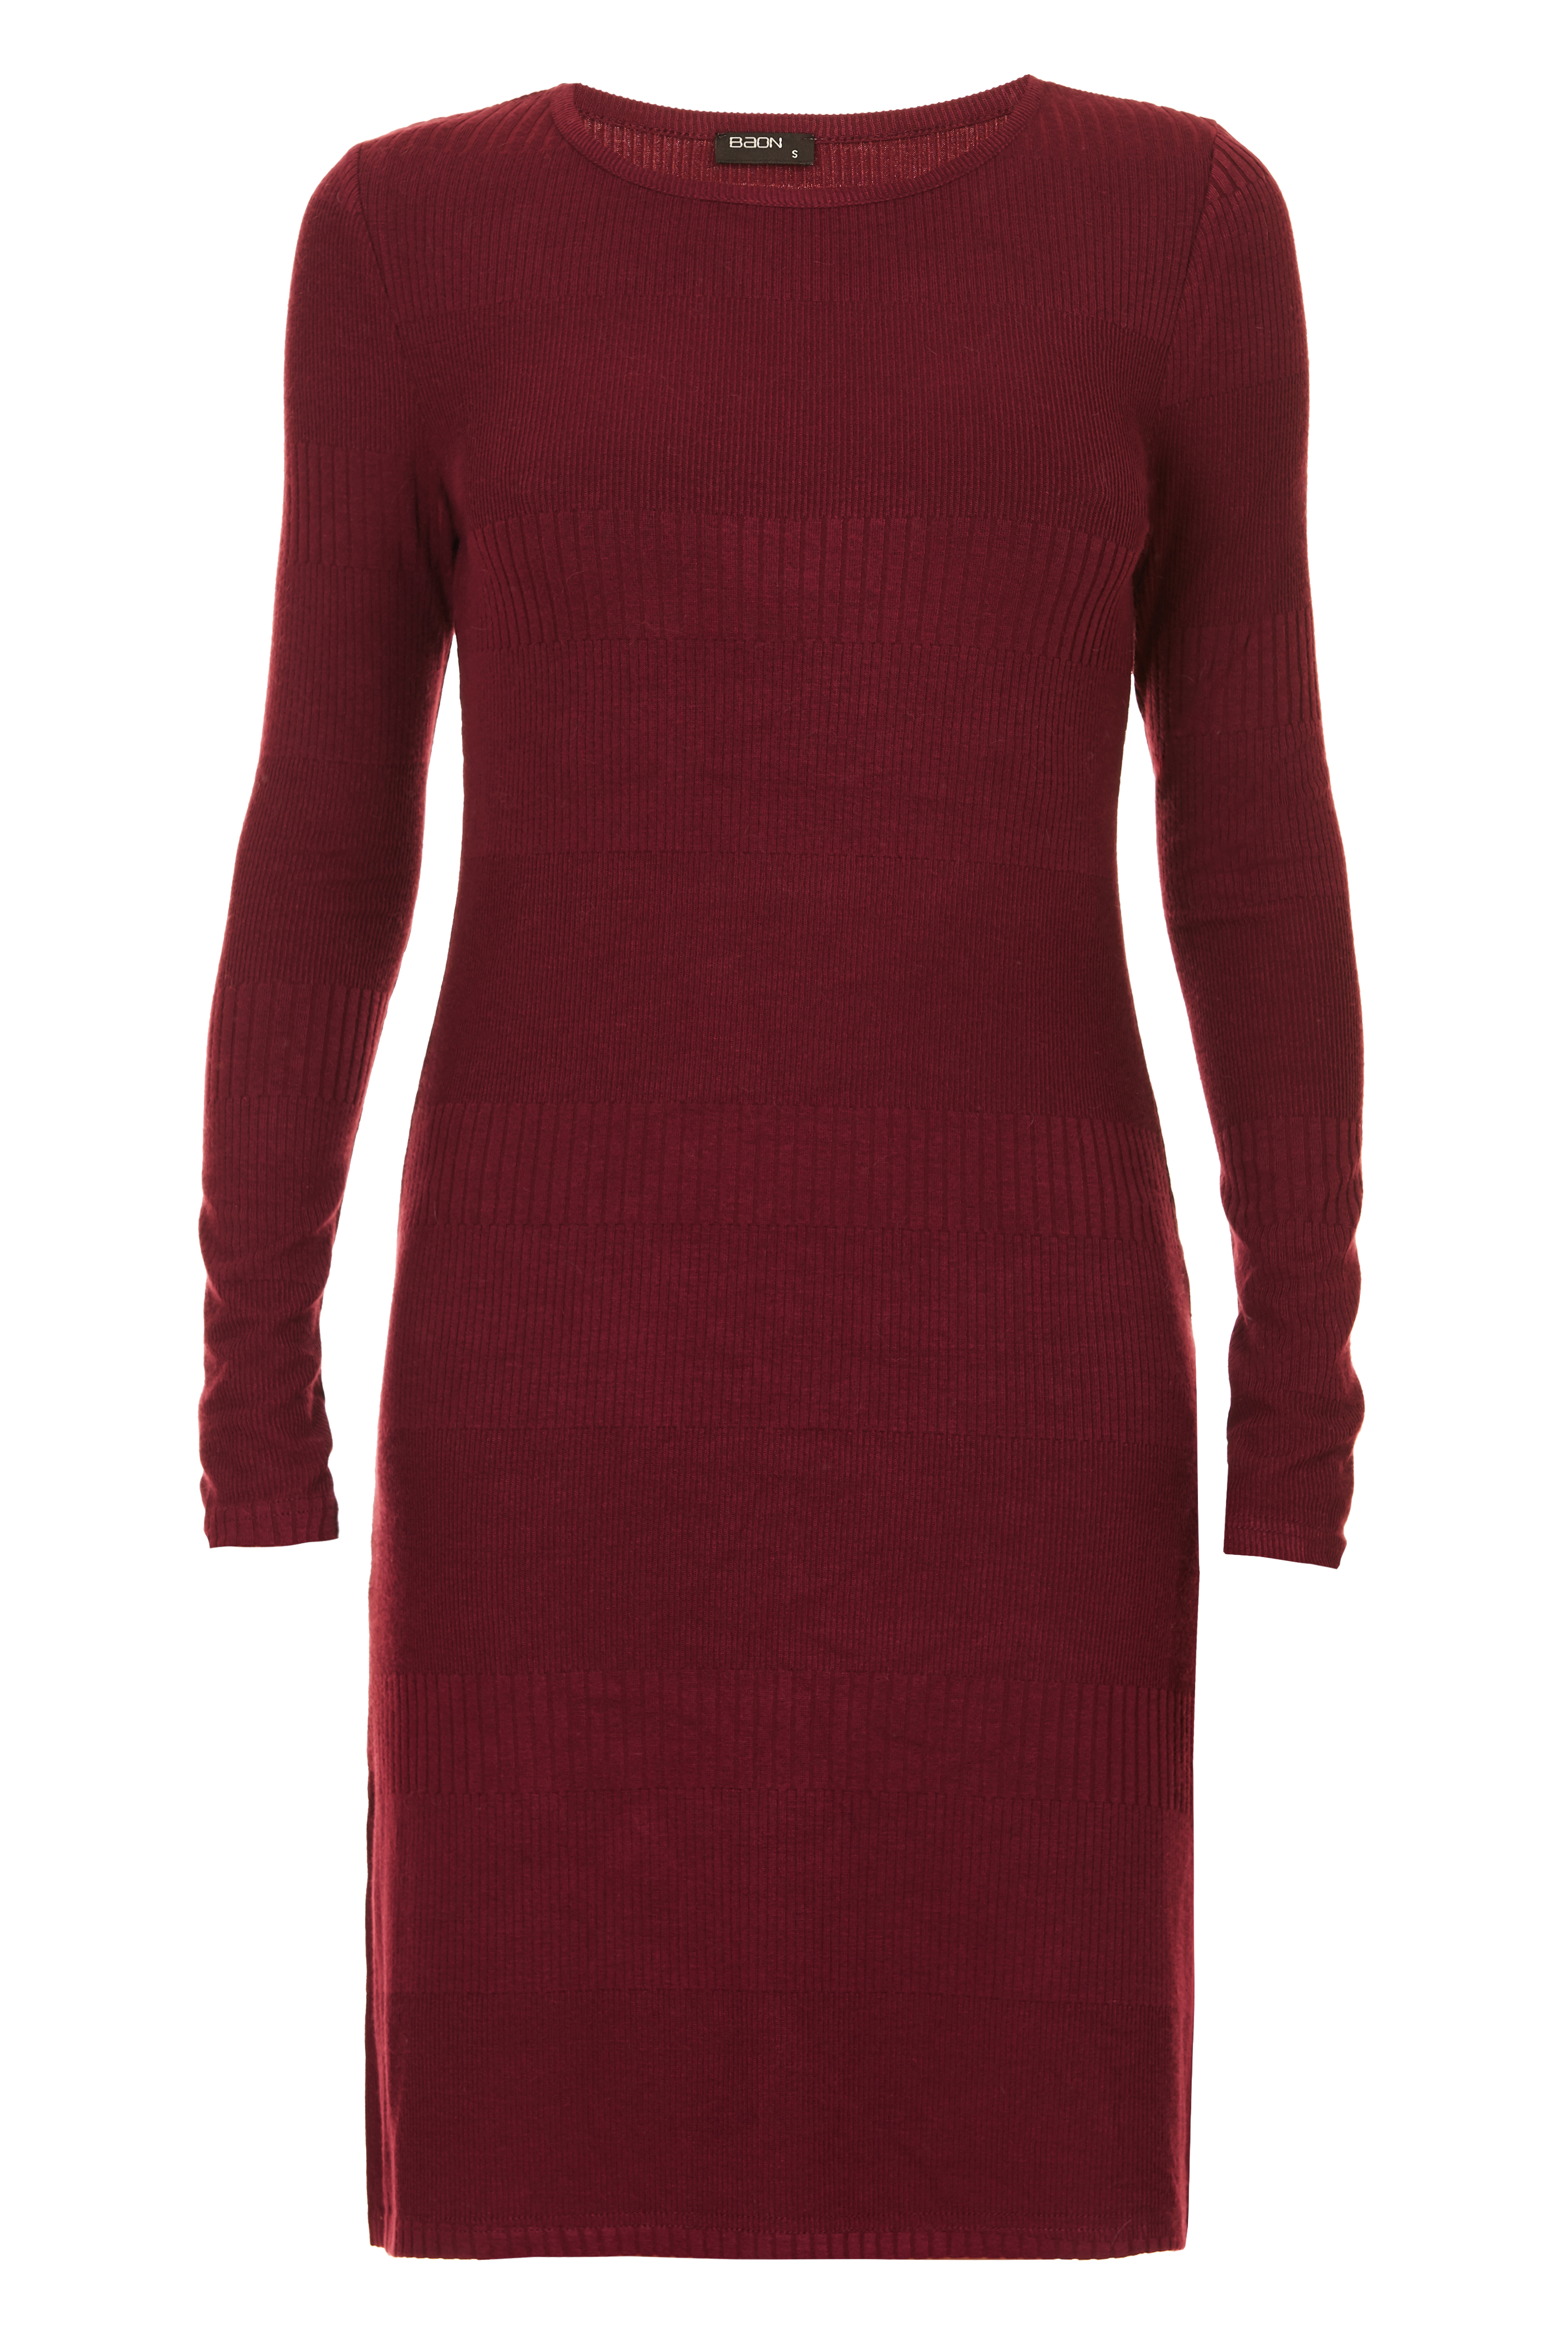 Платье из трикотажа с узором (арт. baon B457555), размер L, цвет красный Платье из трикотажа с узором (арт. baon B457555) - фото 3